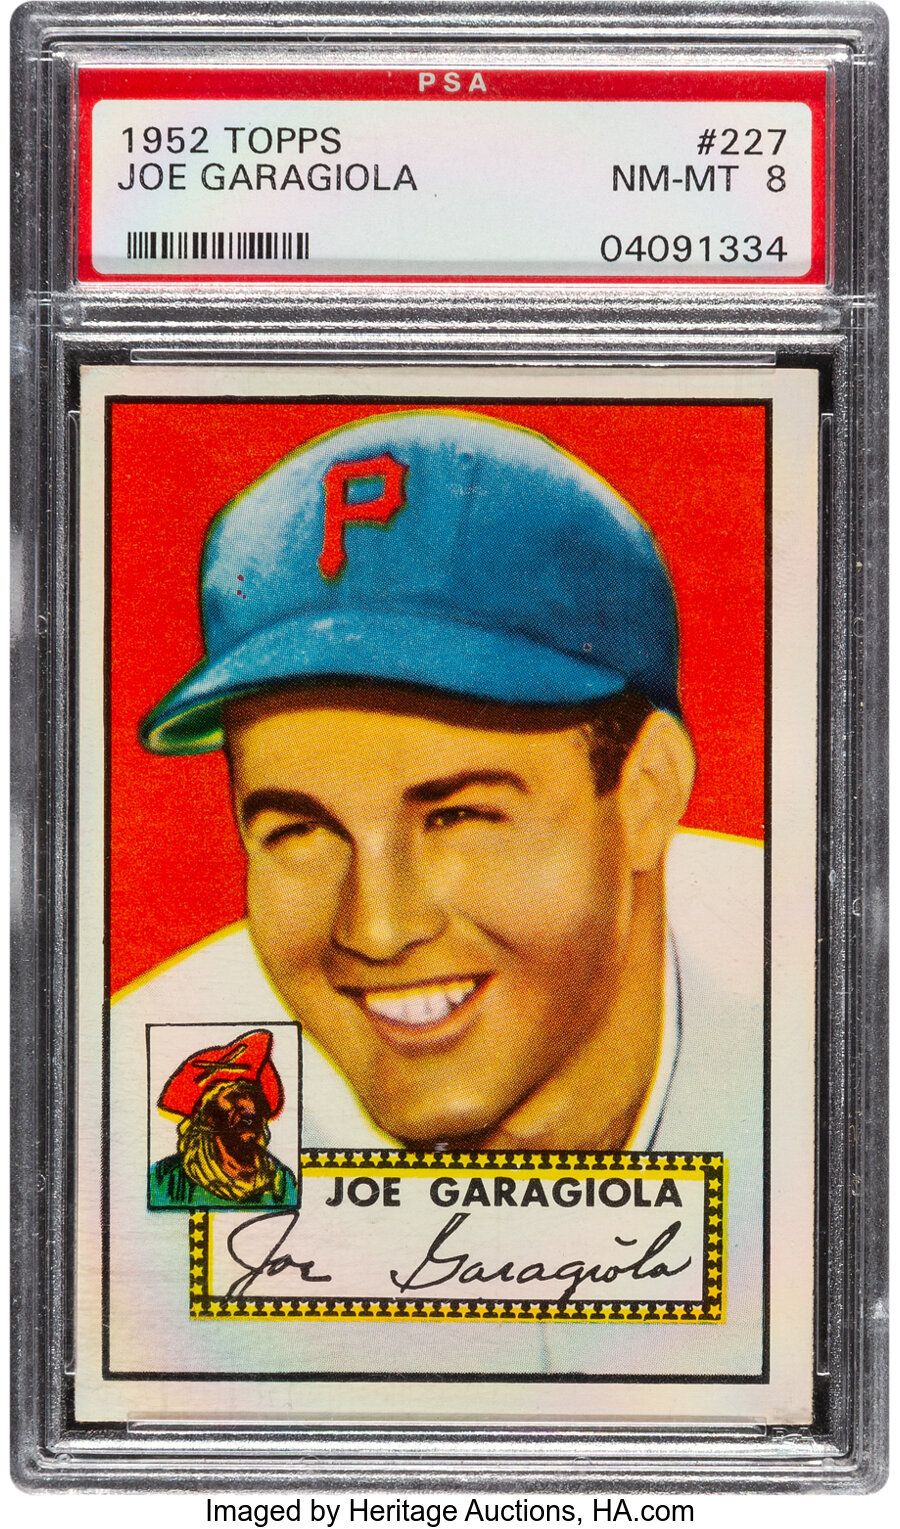 1952 Topps Joe Garagiola #227 PSA NM-MT 8